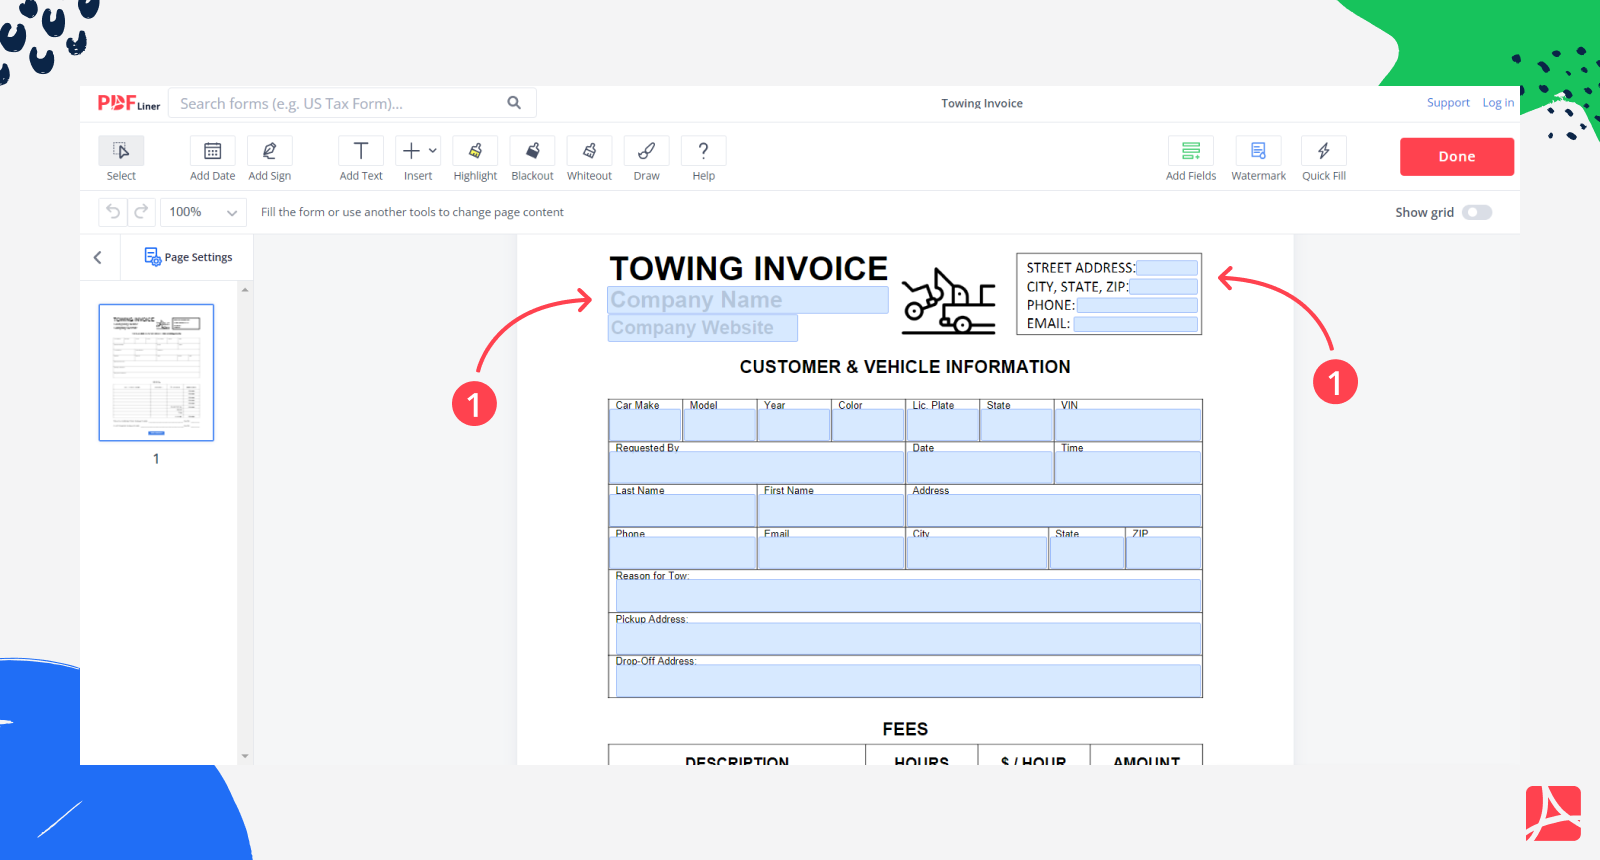 Towing Invoice screenshot step 1